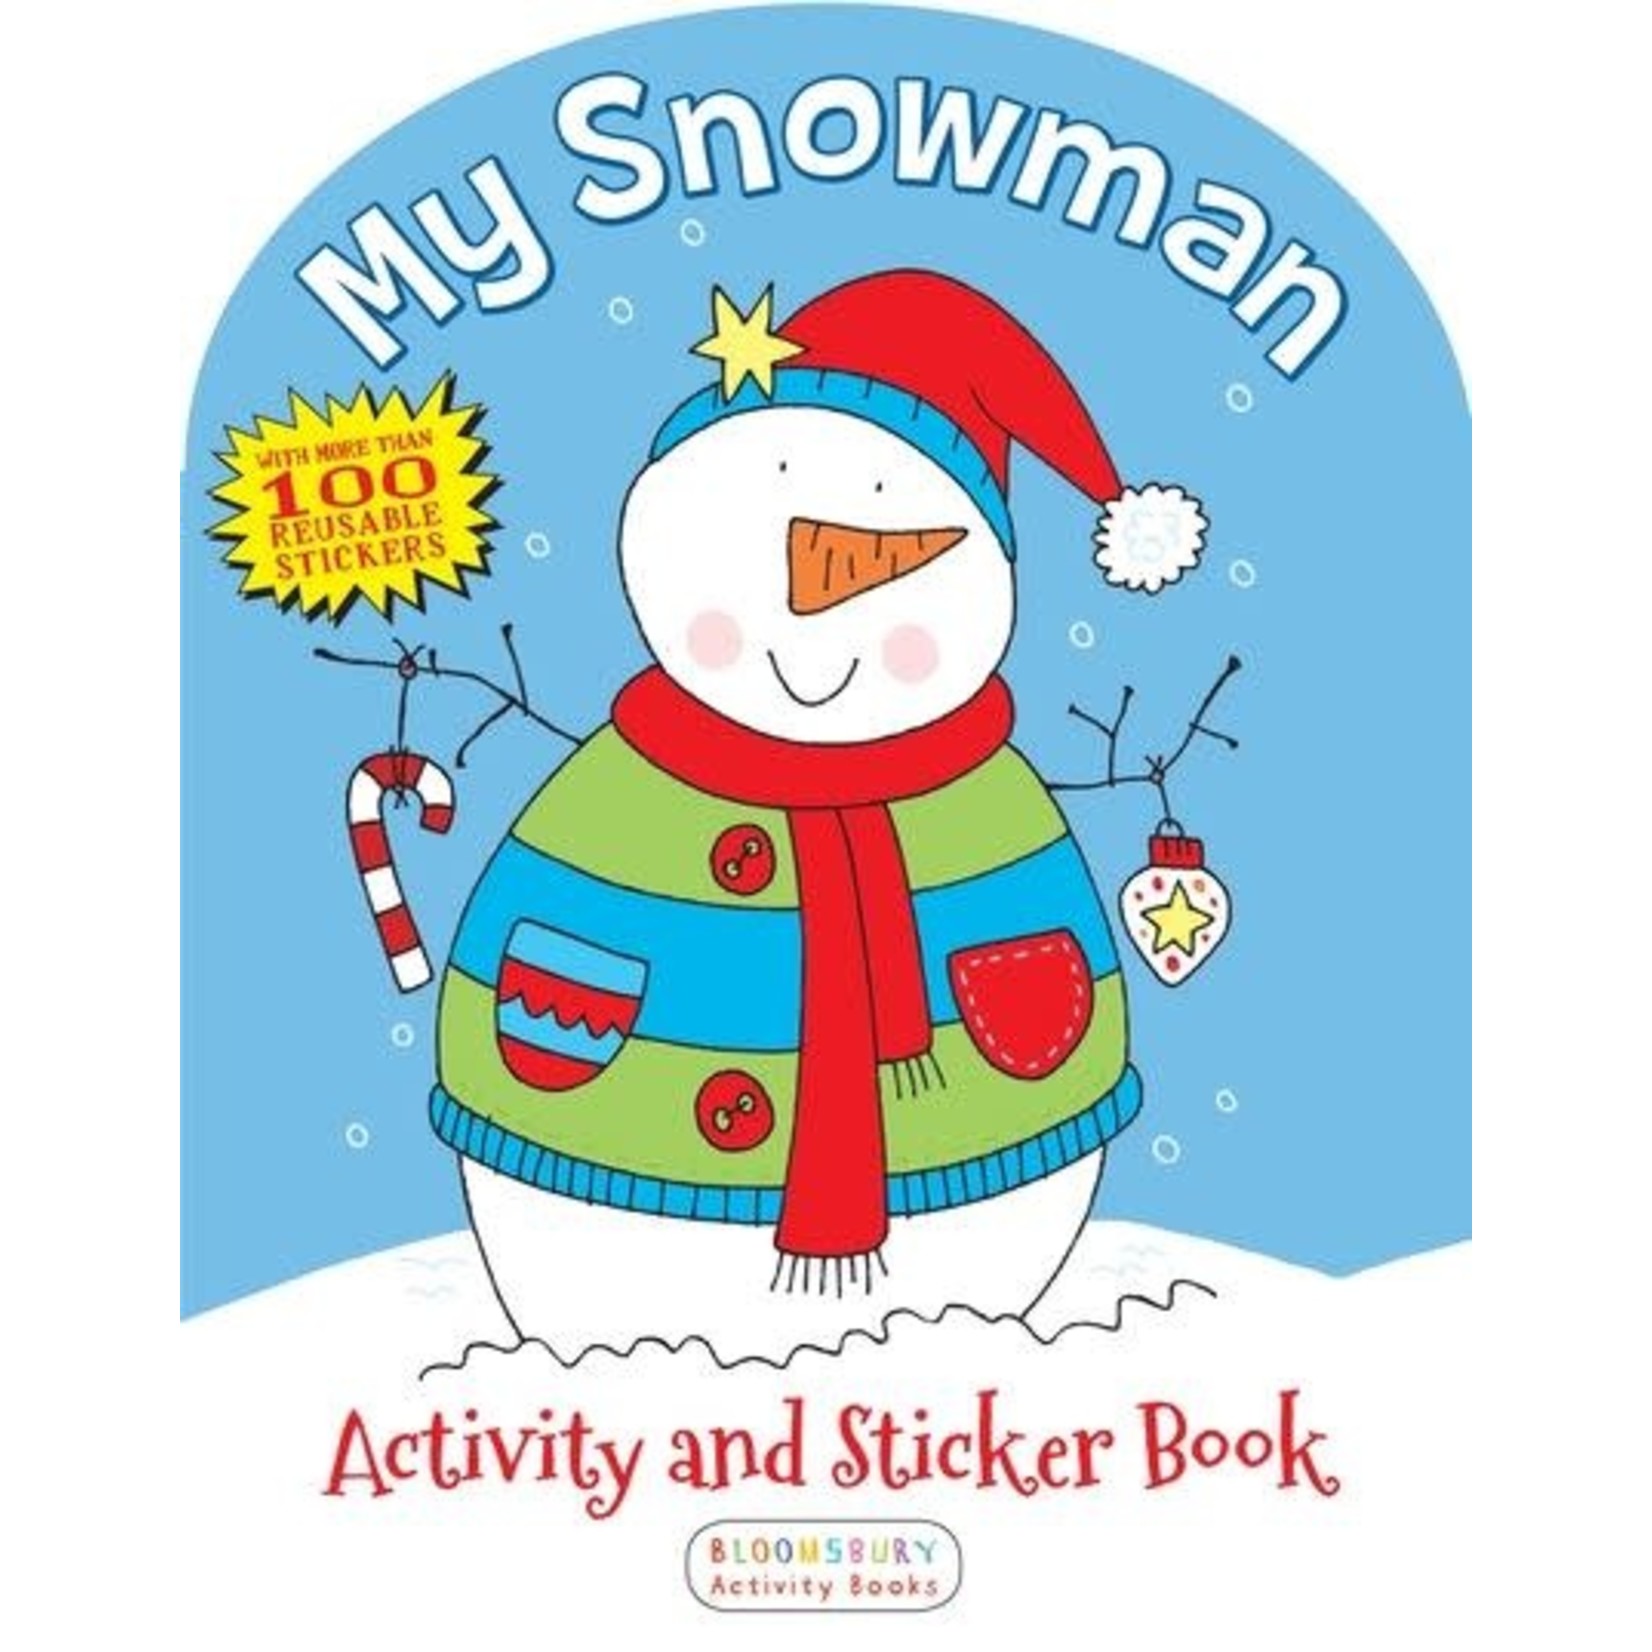 My Snowman - Activity and Sticker Book